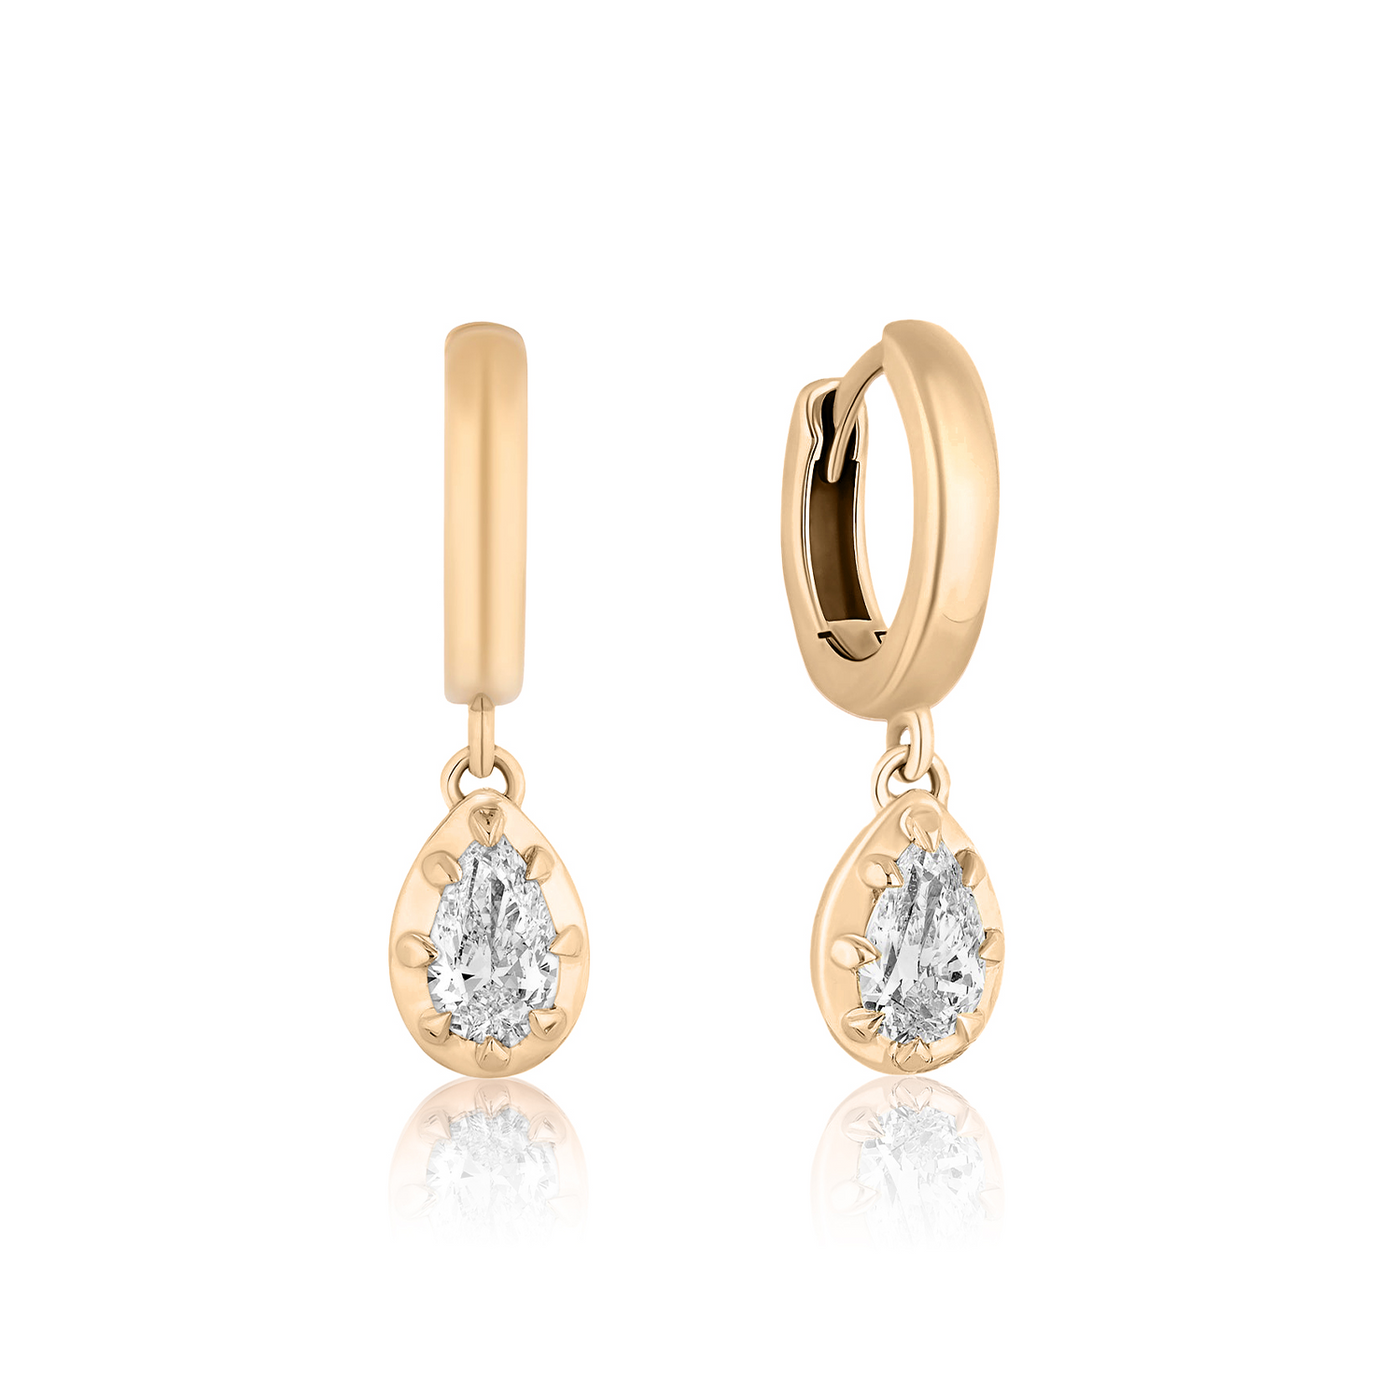 Two-Tone Pear Diamond Hoop Earrings